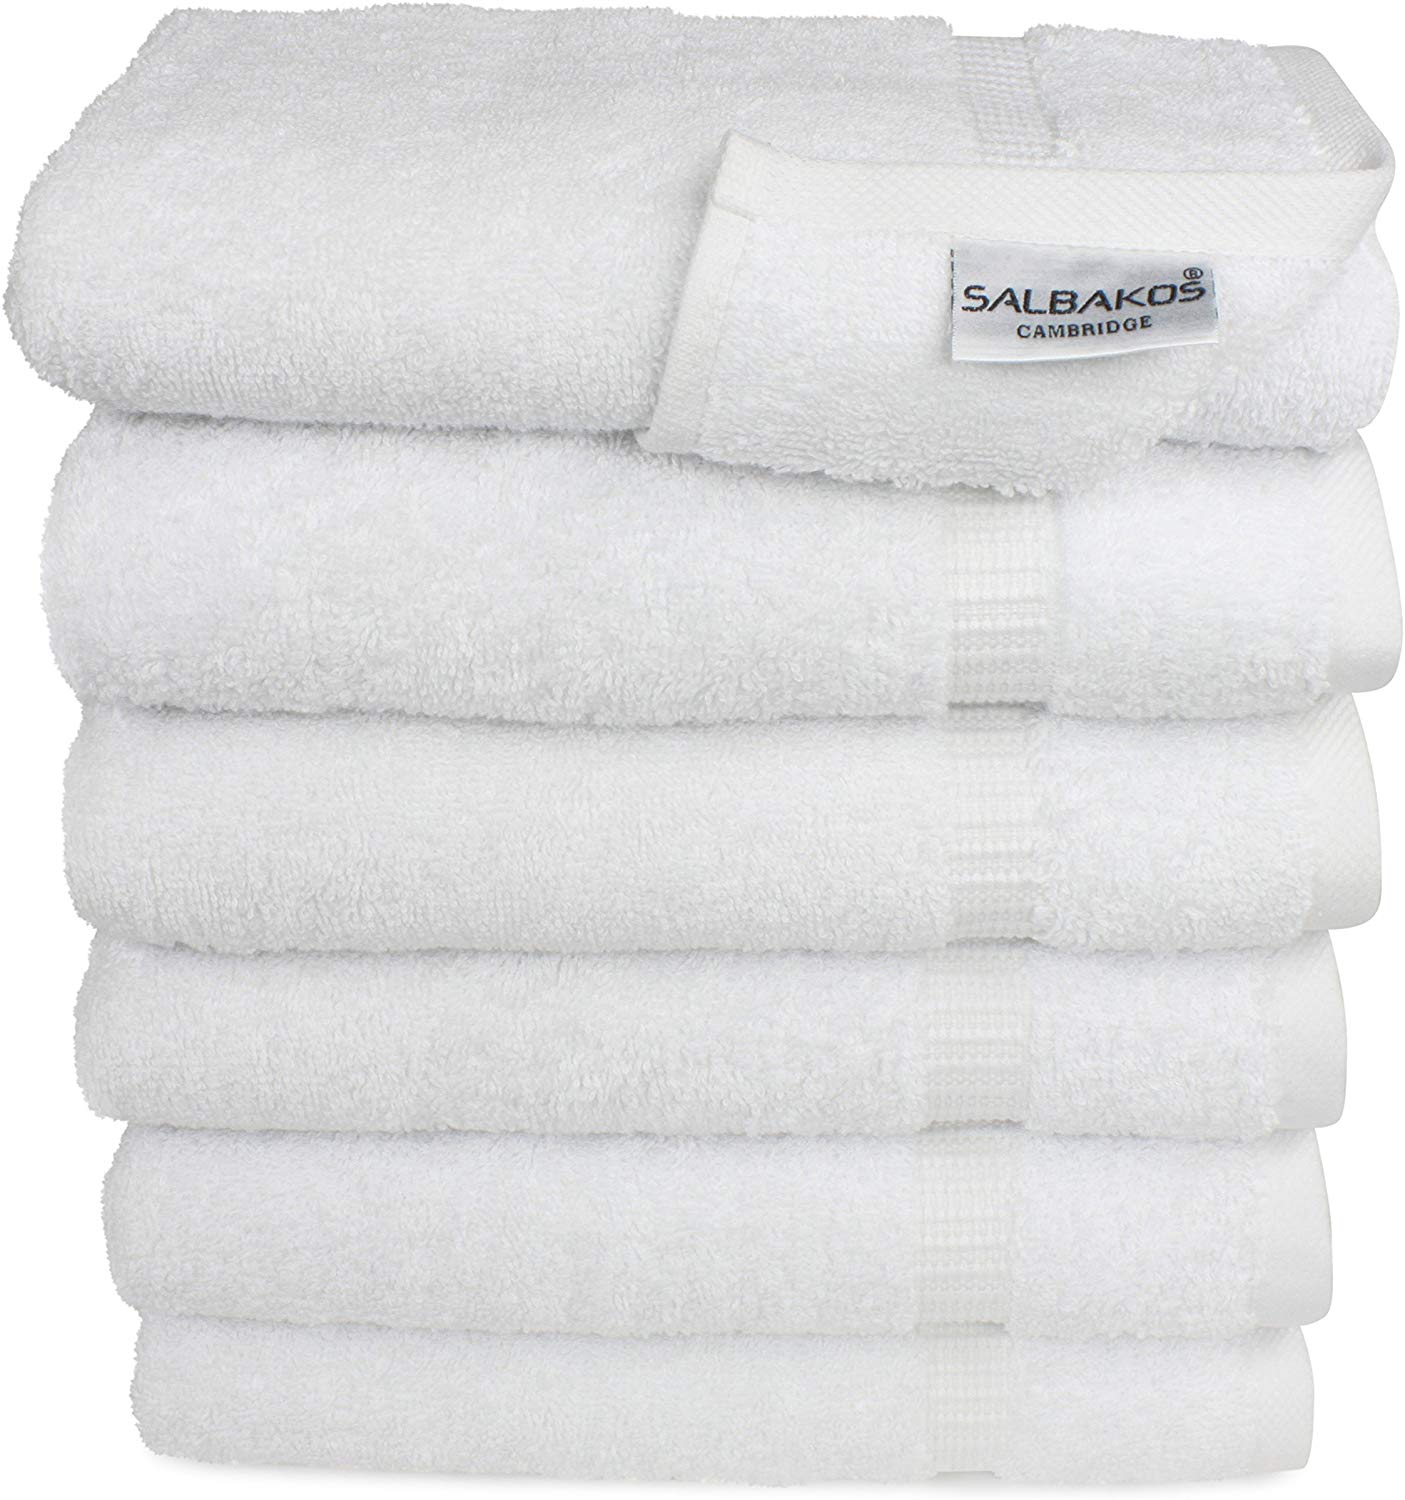 SALBAKOS Ultra Soft Fluffy Hand Towels, 6-Pack